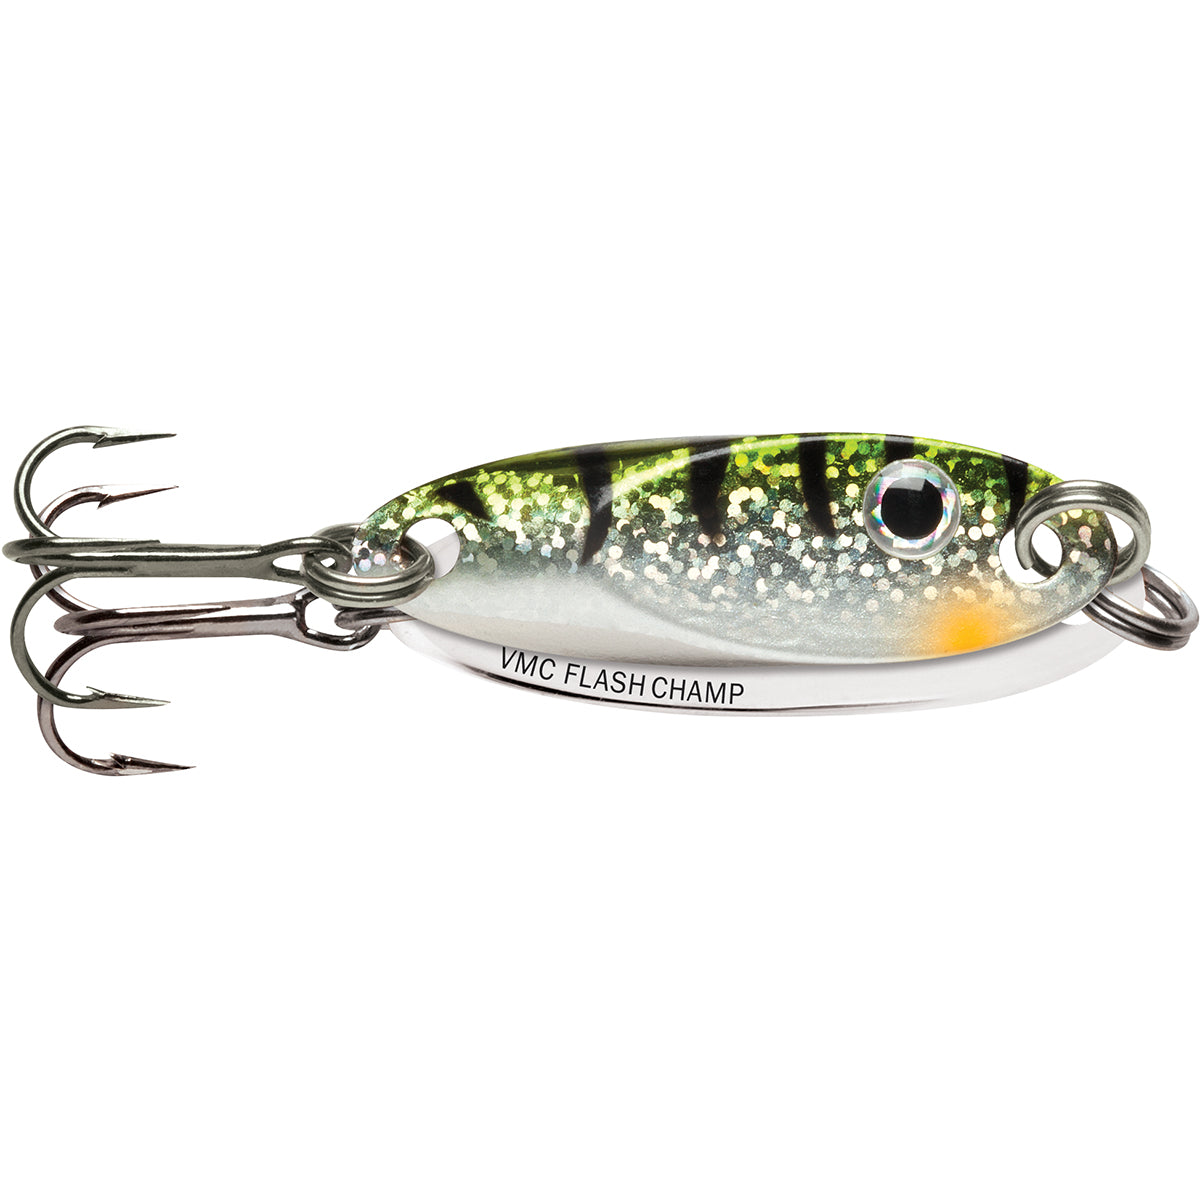 VMC 1/16 oz. Flash Champ Spoon Fishing Lure - Yellow Perch VMC